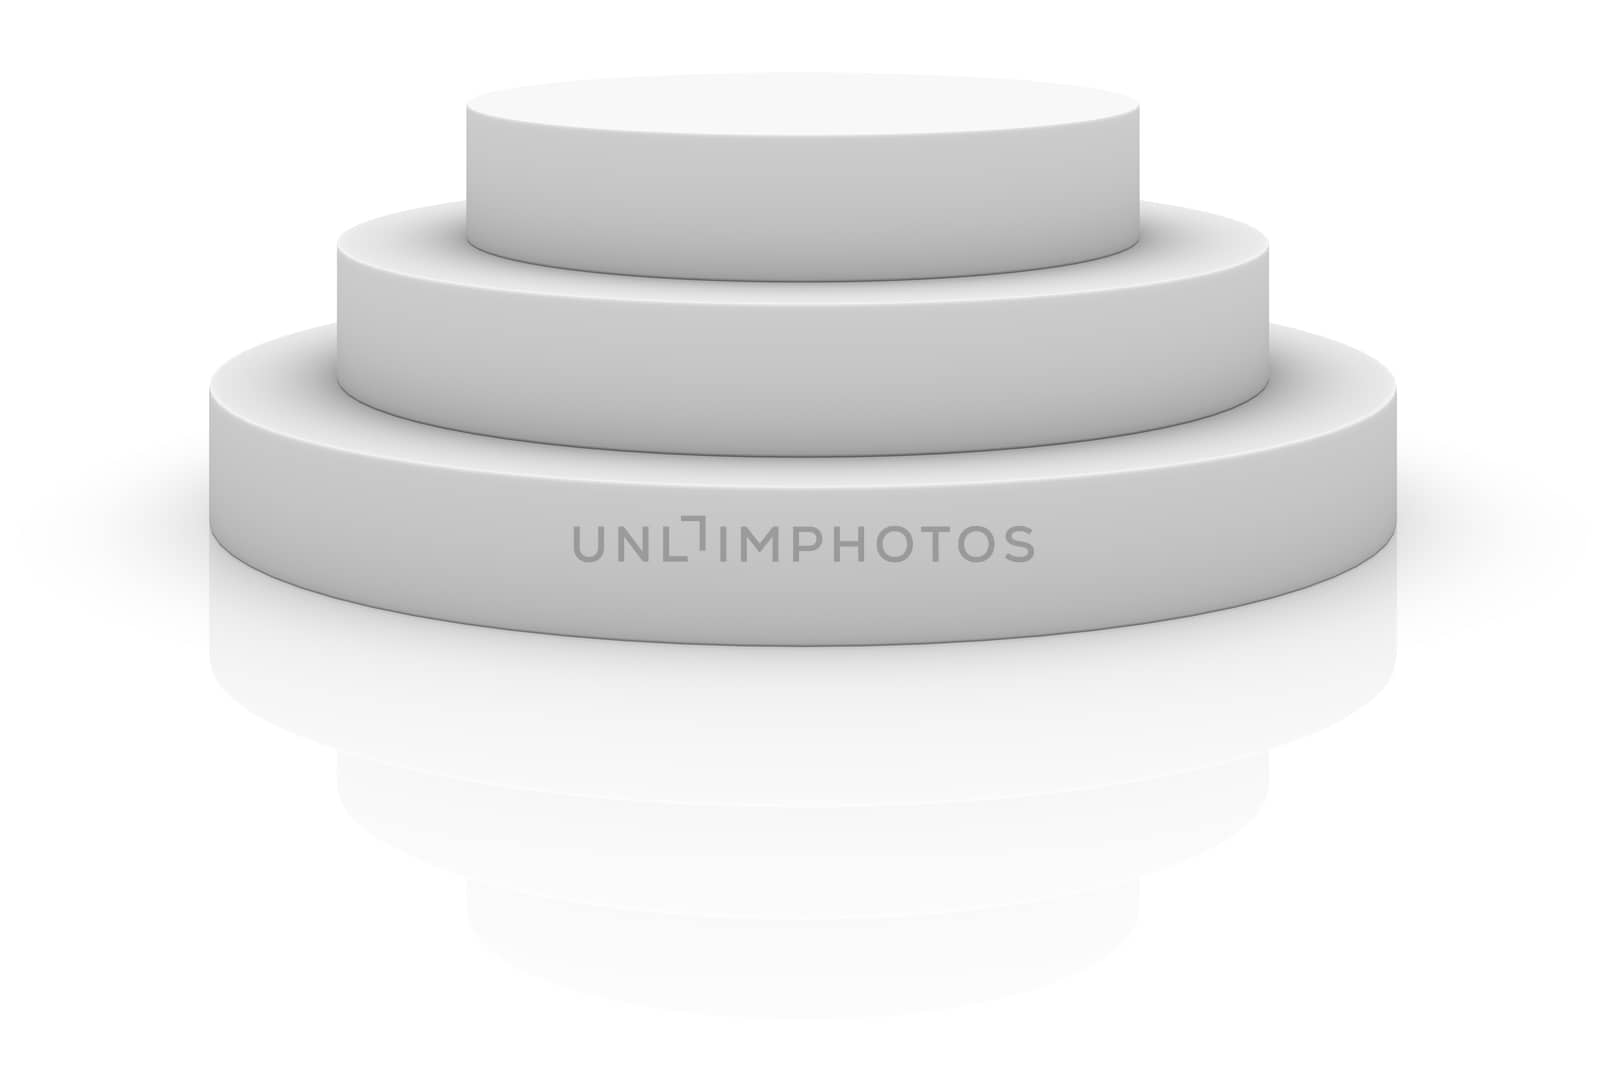 Round stage podium, pedestal isolated on white background. 3D illustration